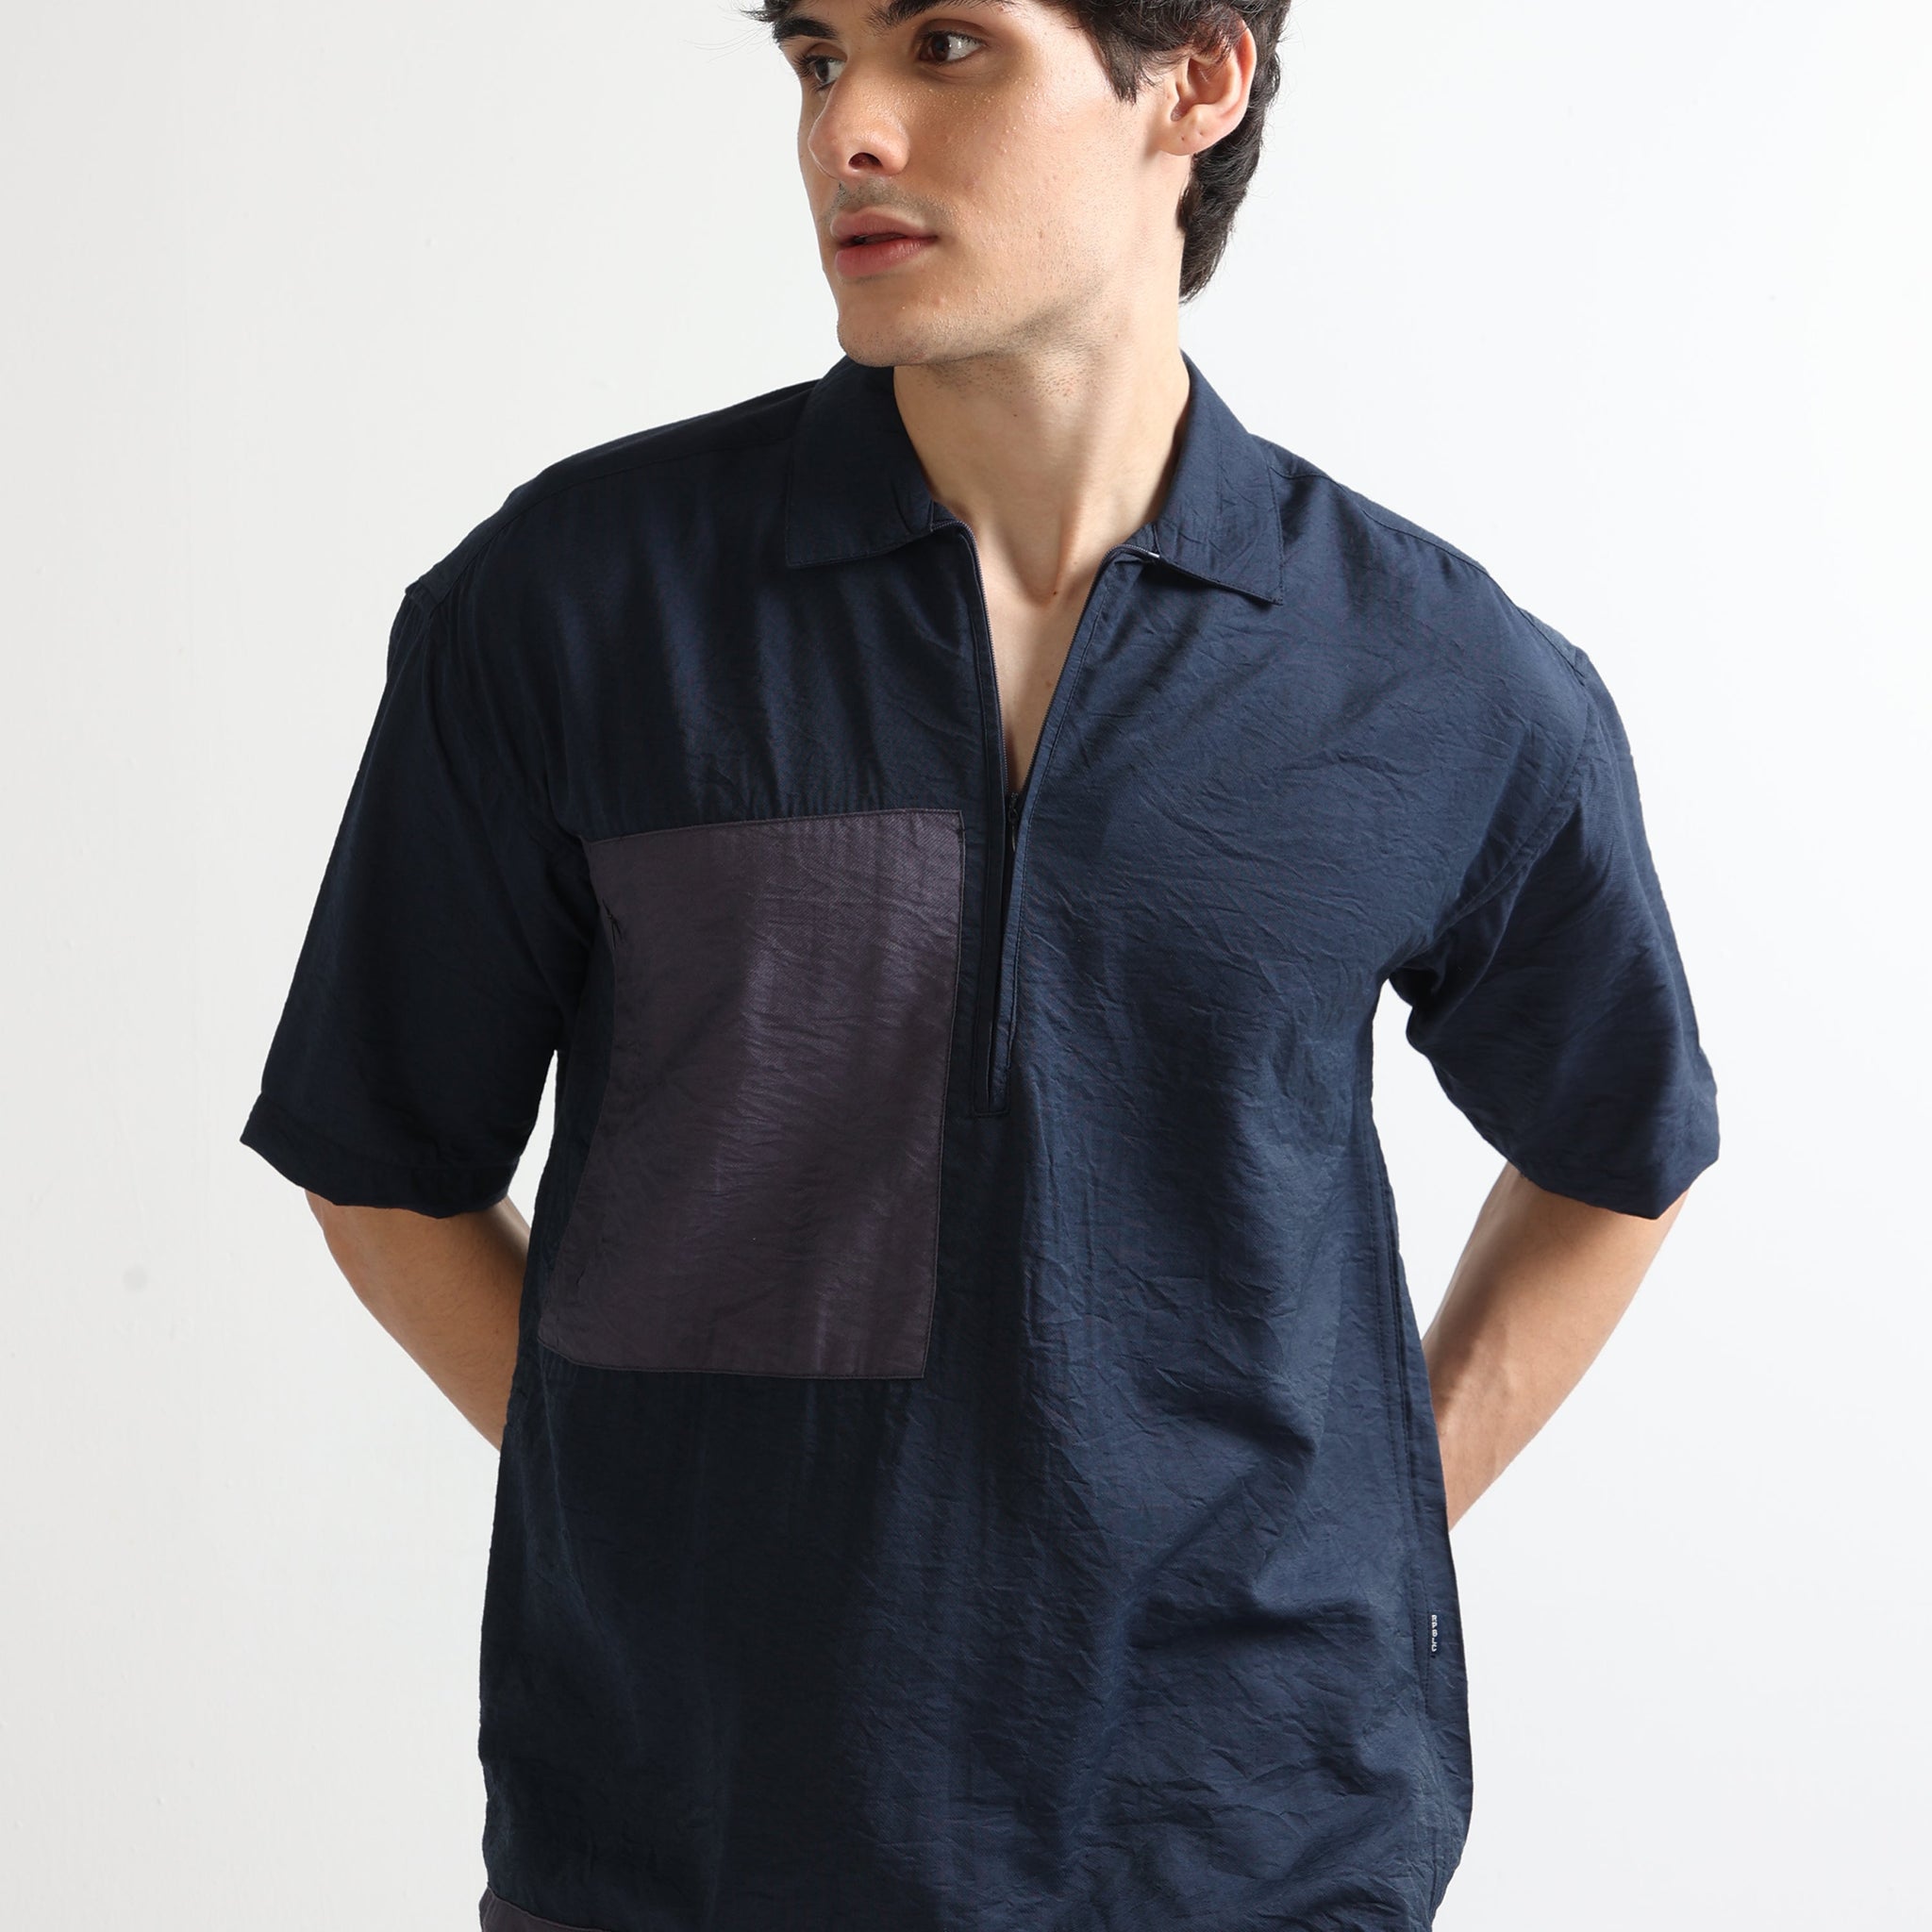 Buy Imported Fabric Stylish Drawcod Shirt Online.